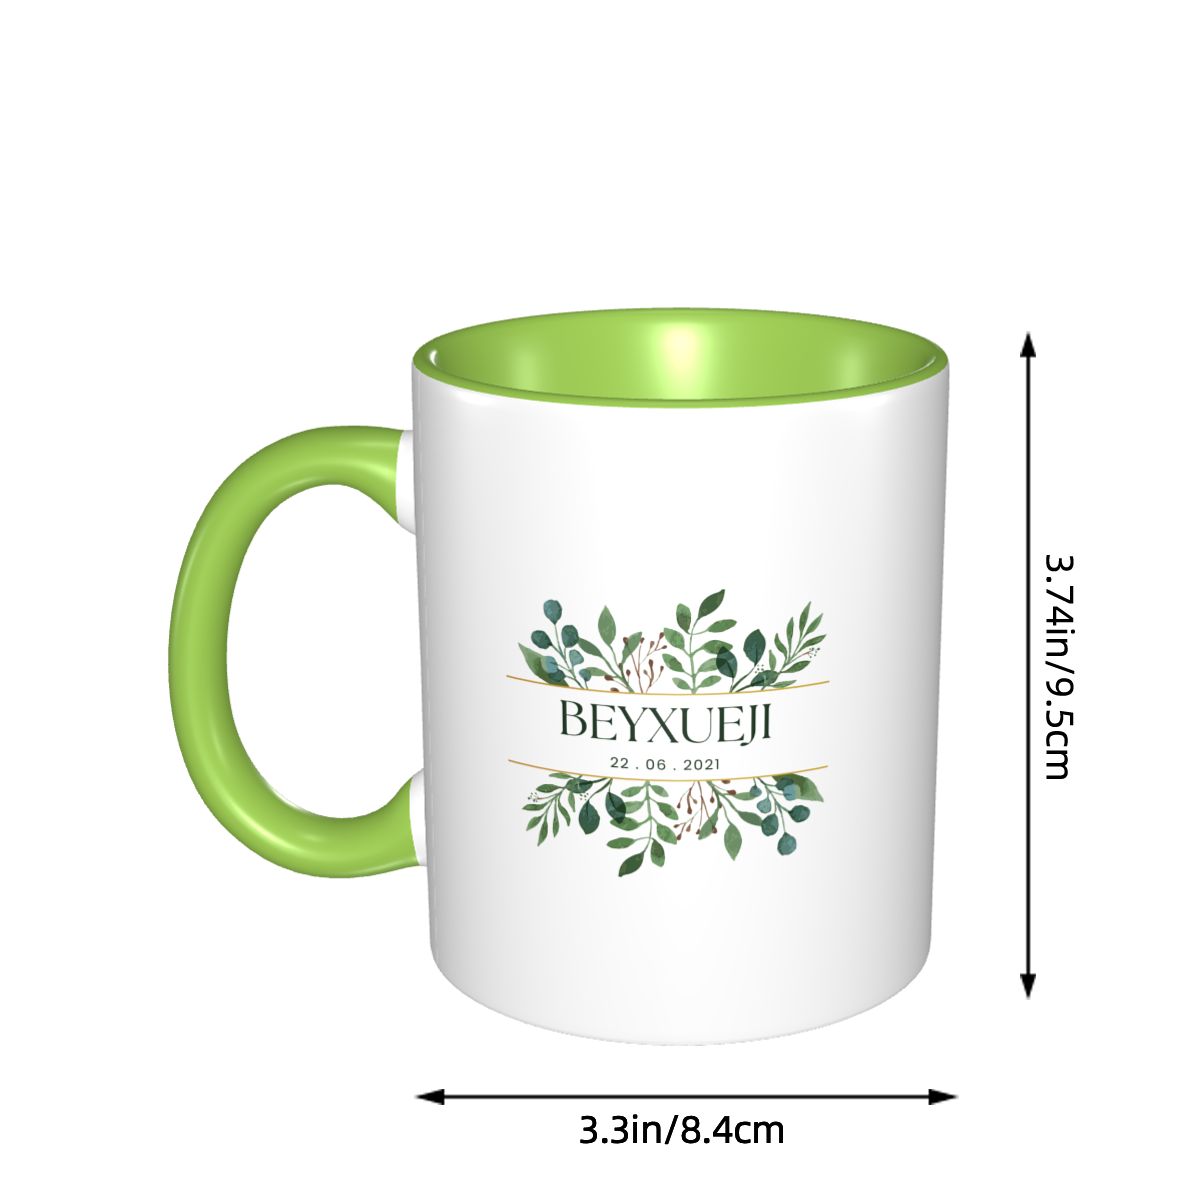 Beyxueji Graphic Printing Mug